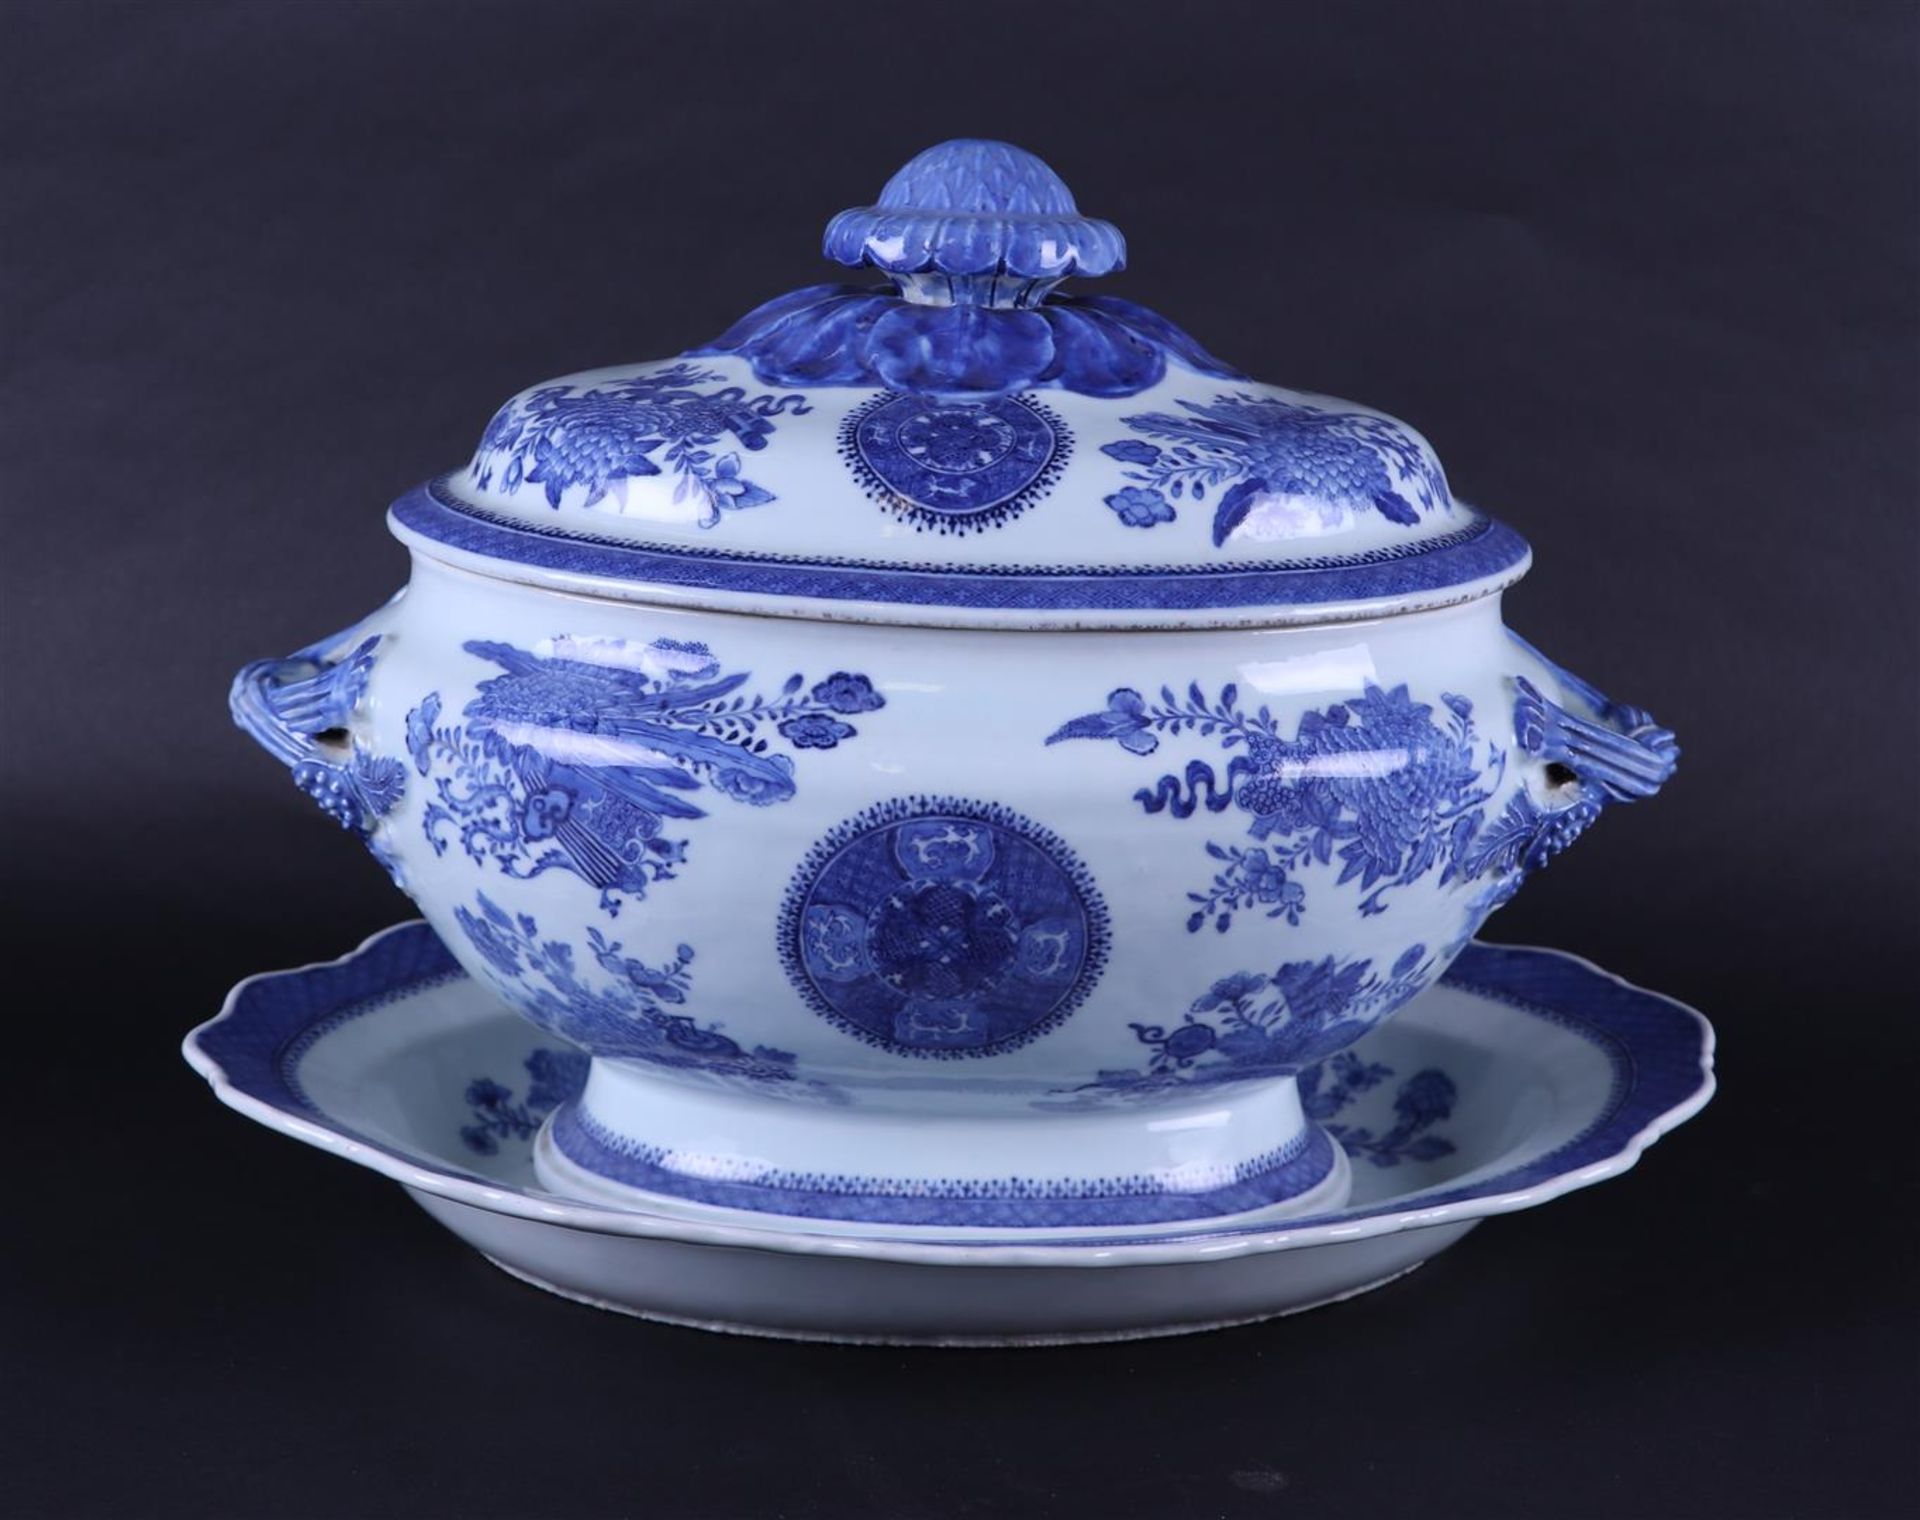 A large porcelain terinne on a lower dish. Floral decoration. China, Qianlong.
40 x 28 cm.